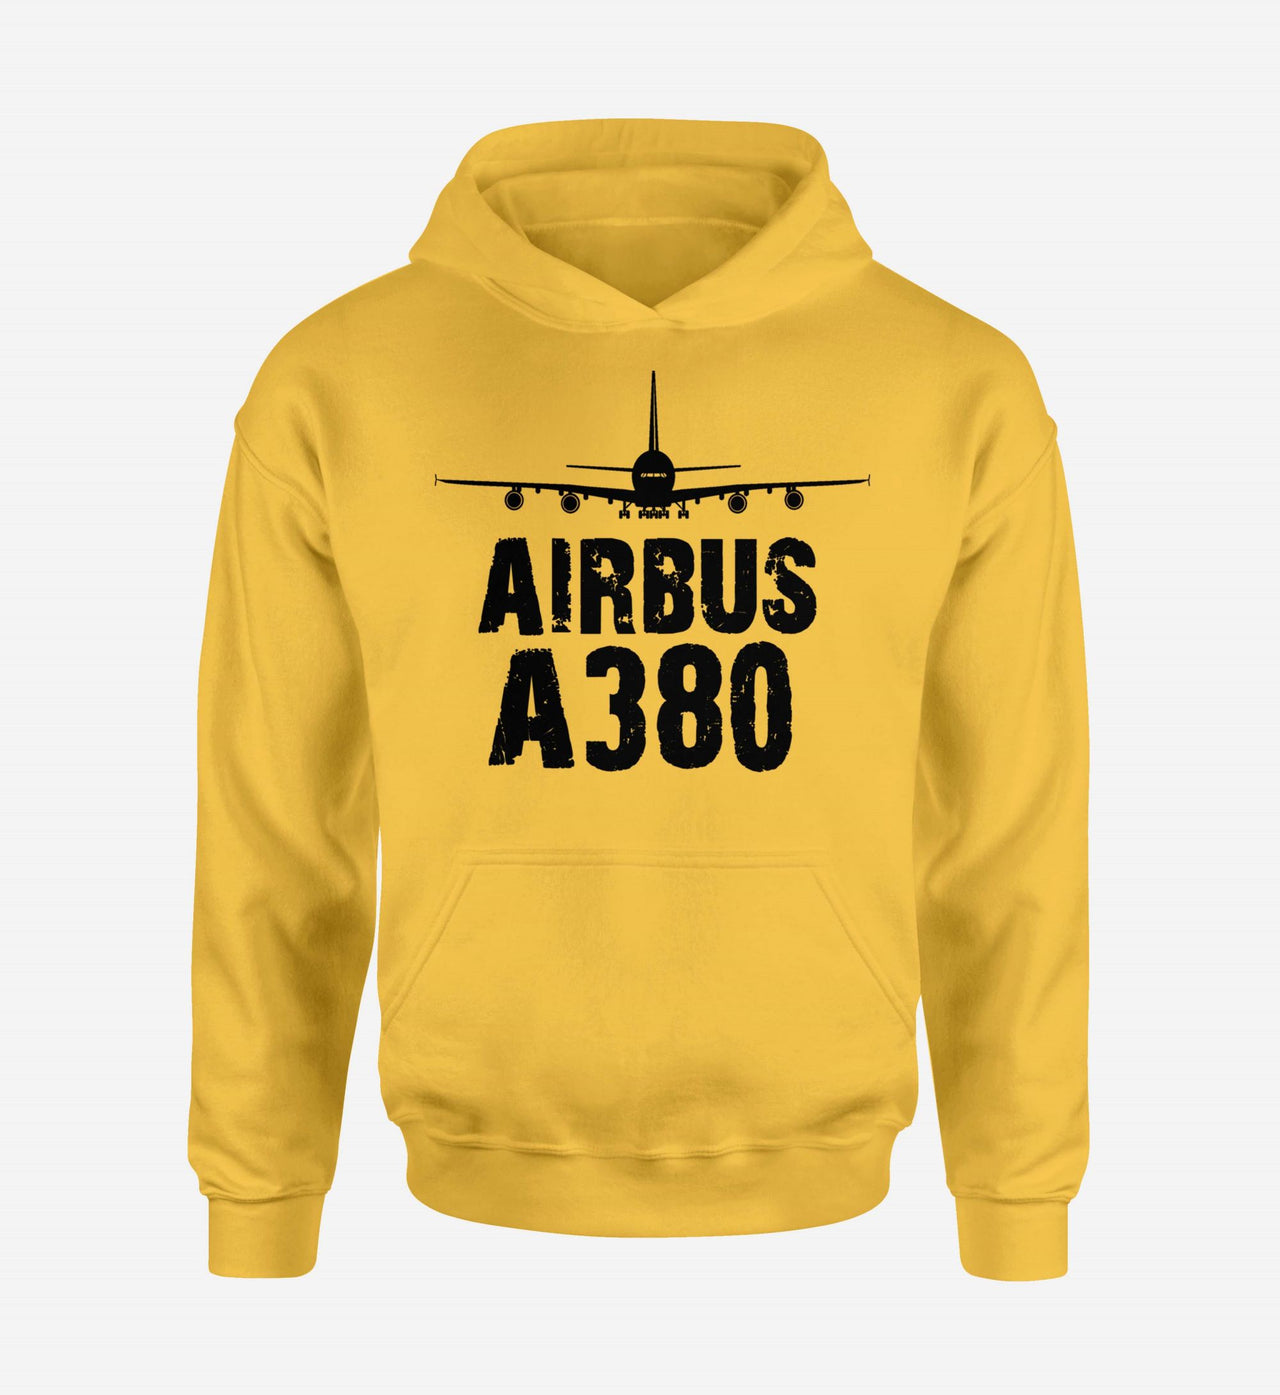 Airbus A380 & Plane Designed Hoodies